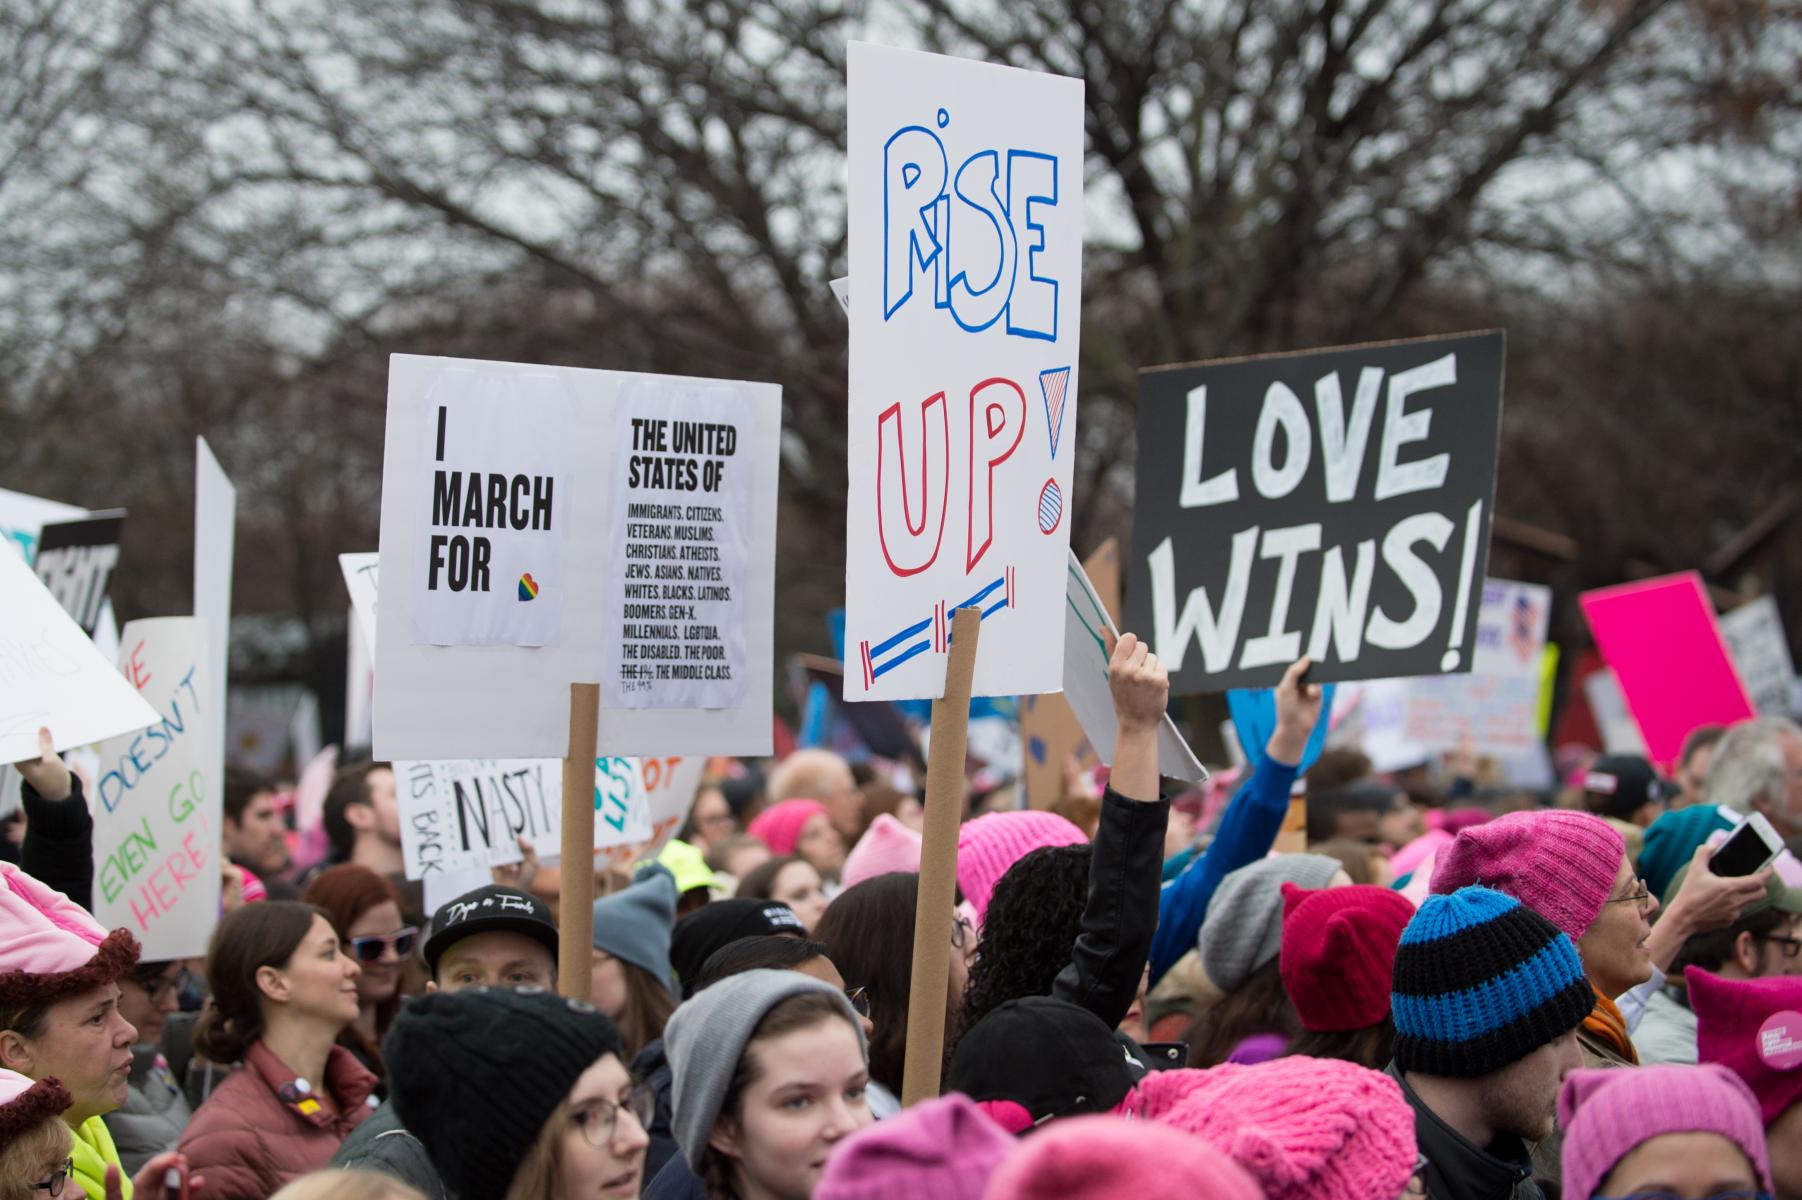 Washington, DC - January 21, 2017 - Women's March